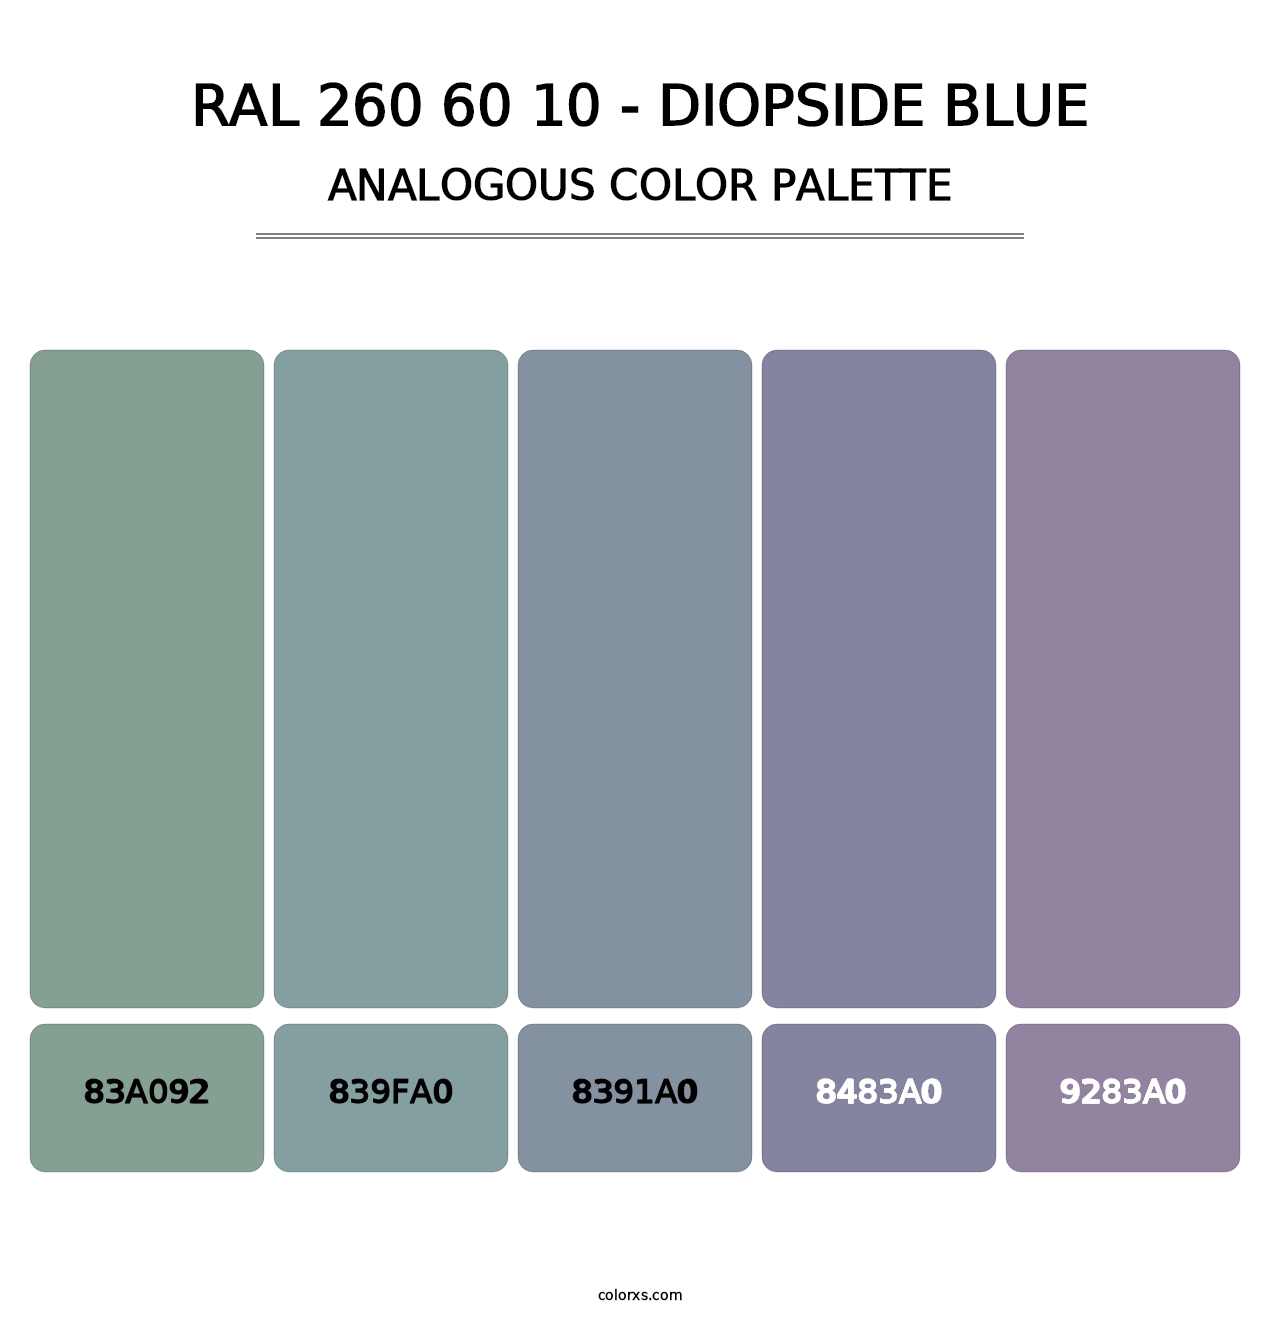 RAL 260 60 10 - Diopside Blue - Analogous Color Palette